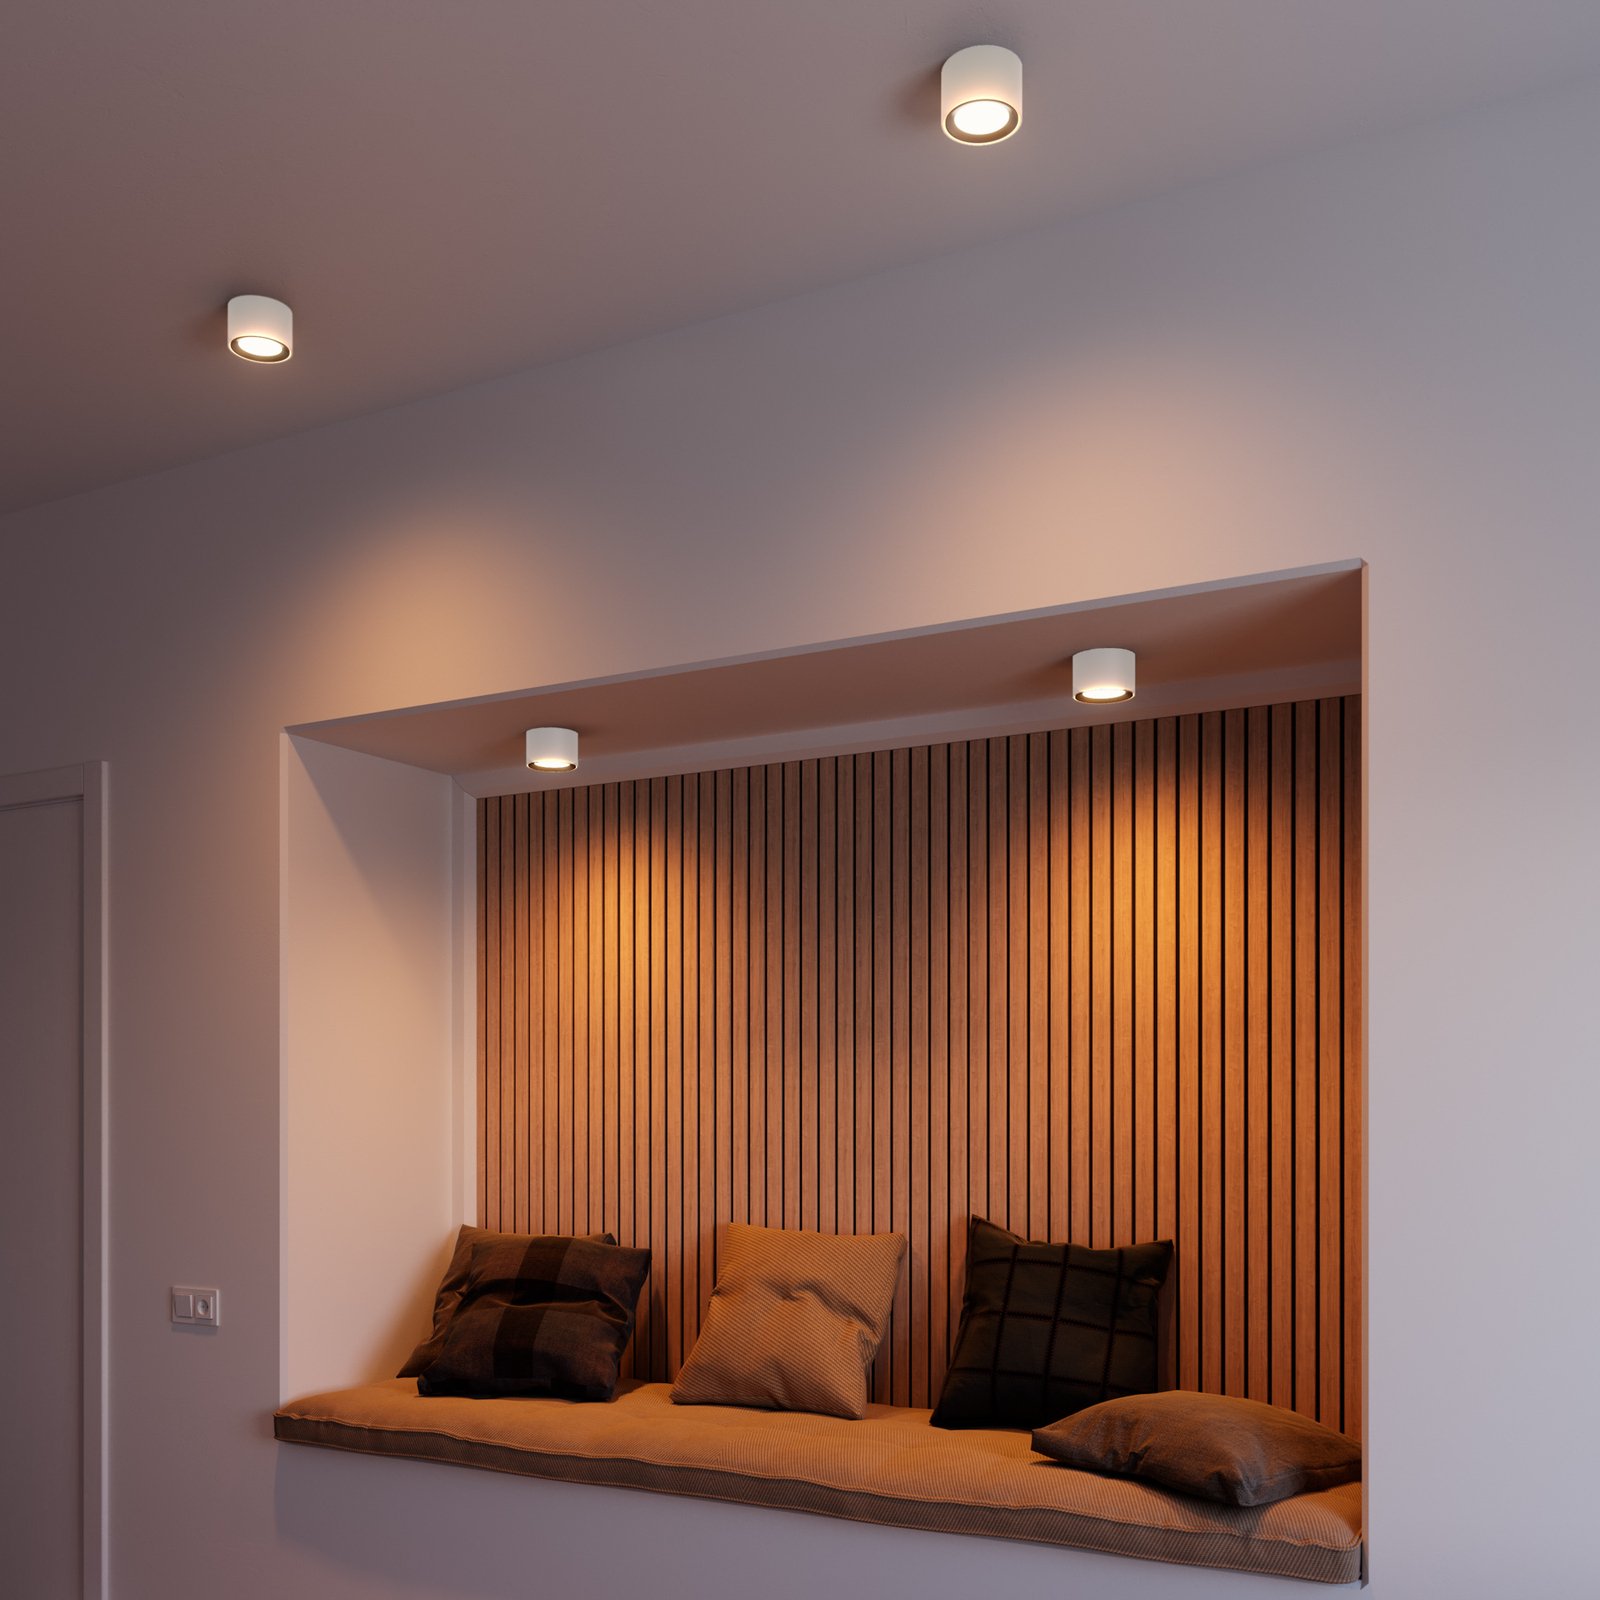 Spot LED soffitto Landon Smart, bianco, alto 8,2cm